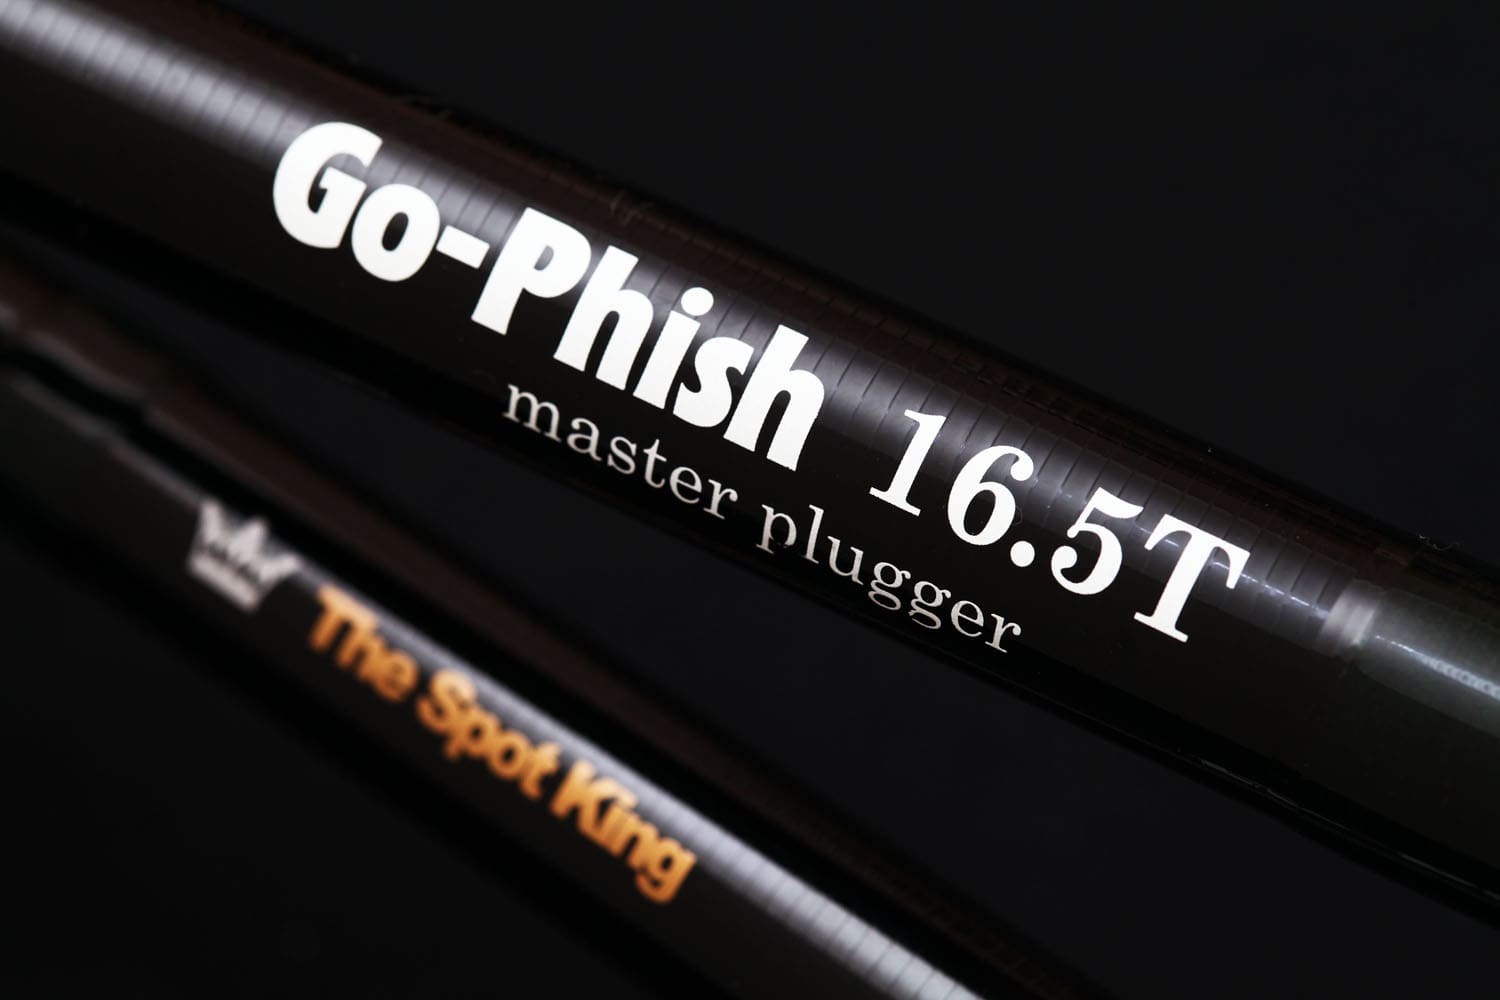 1rod1005-master plugger16.5